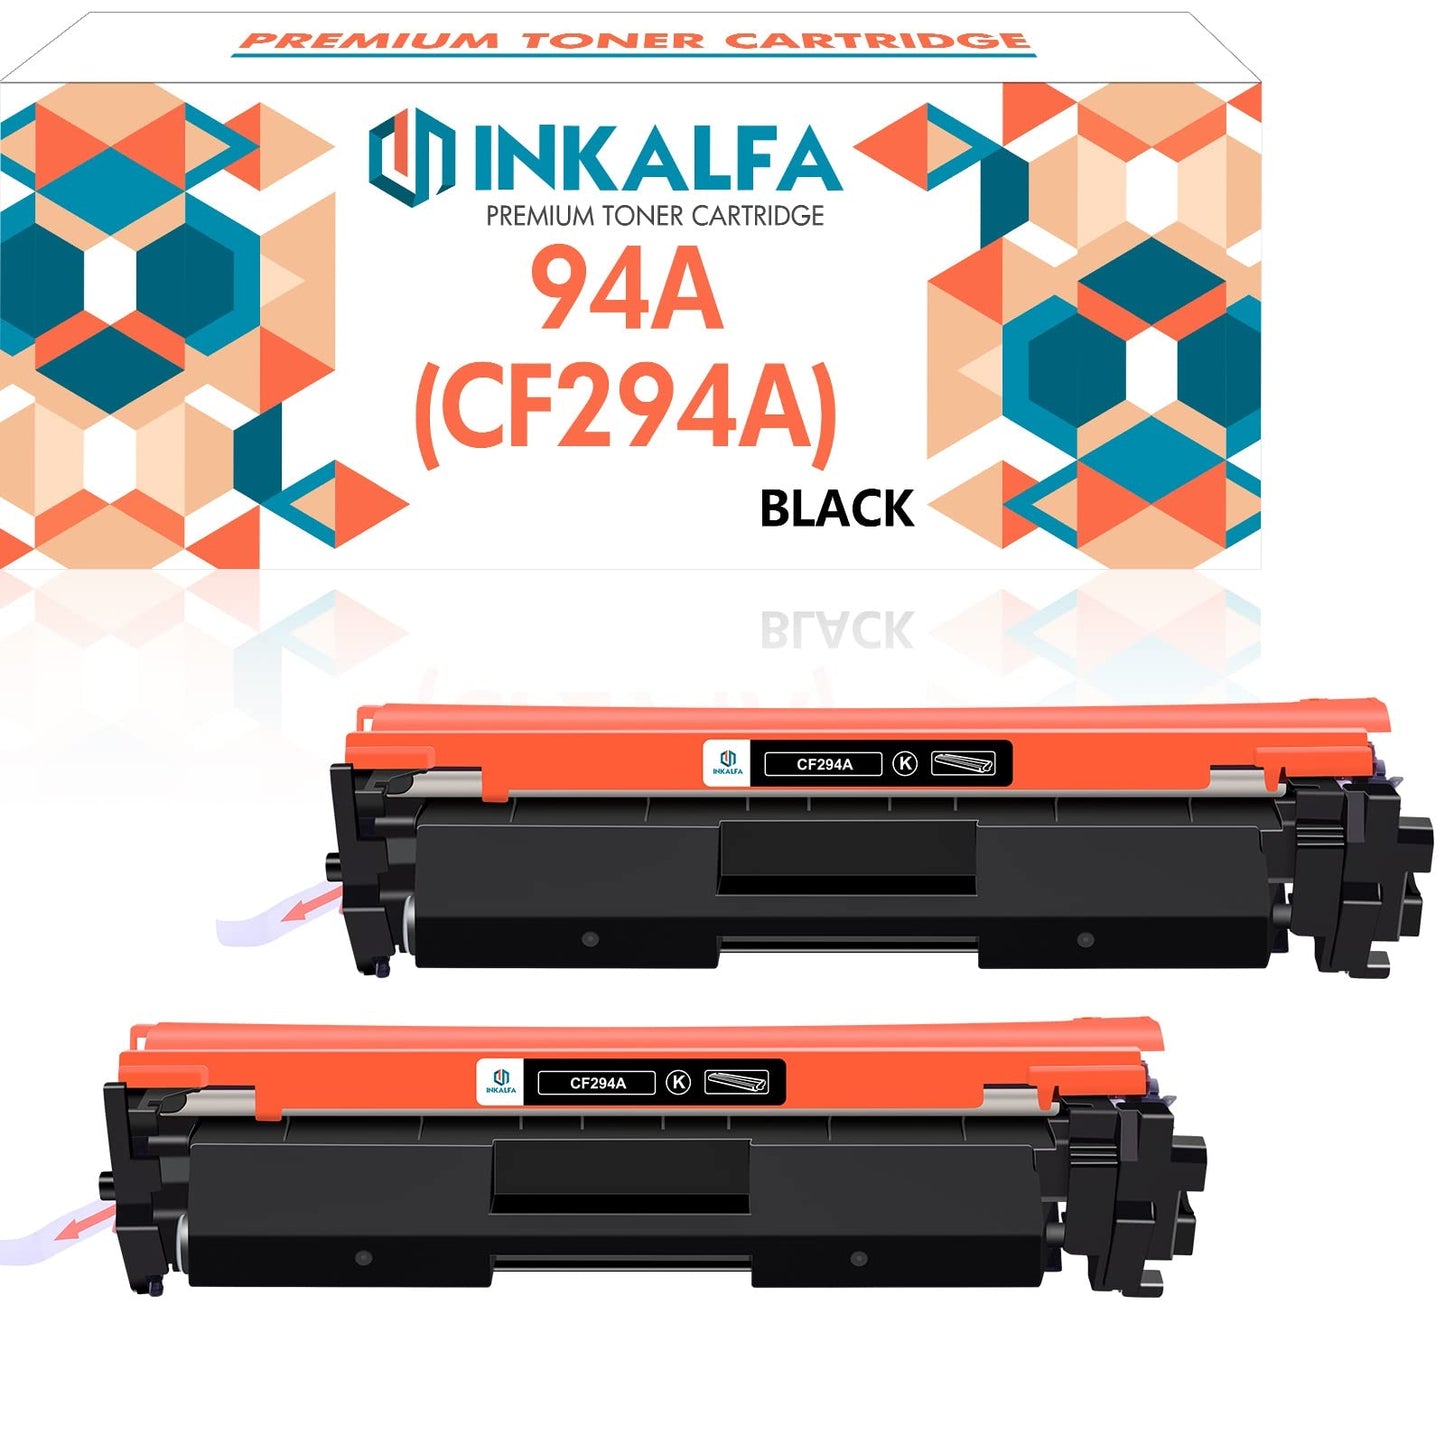 Inkalfa 94A CF294A 94X Toner: Compatible Toner Cartridge Replacement for 94A CF294A 94X CF294X Pro M118dw MFP M148dw M148fdw M149fdw M118 M148 M149 Printer High Yield Ink (Black 2-Pack)